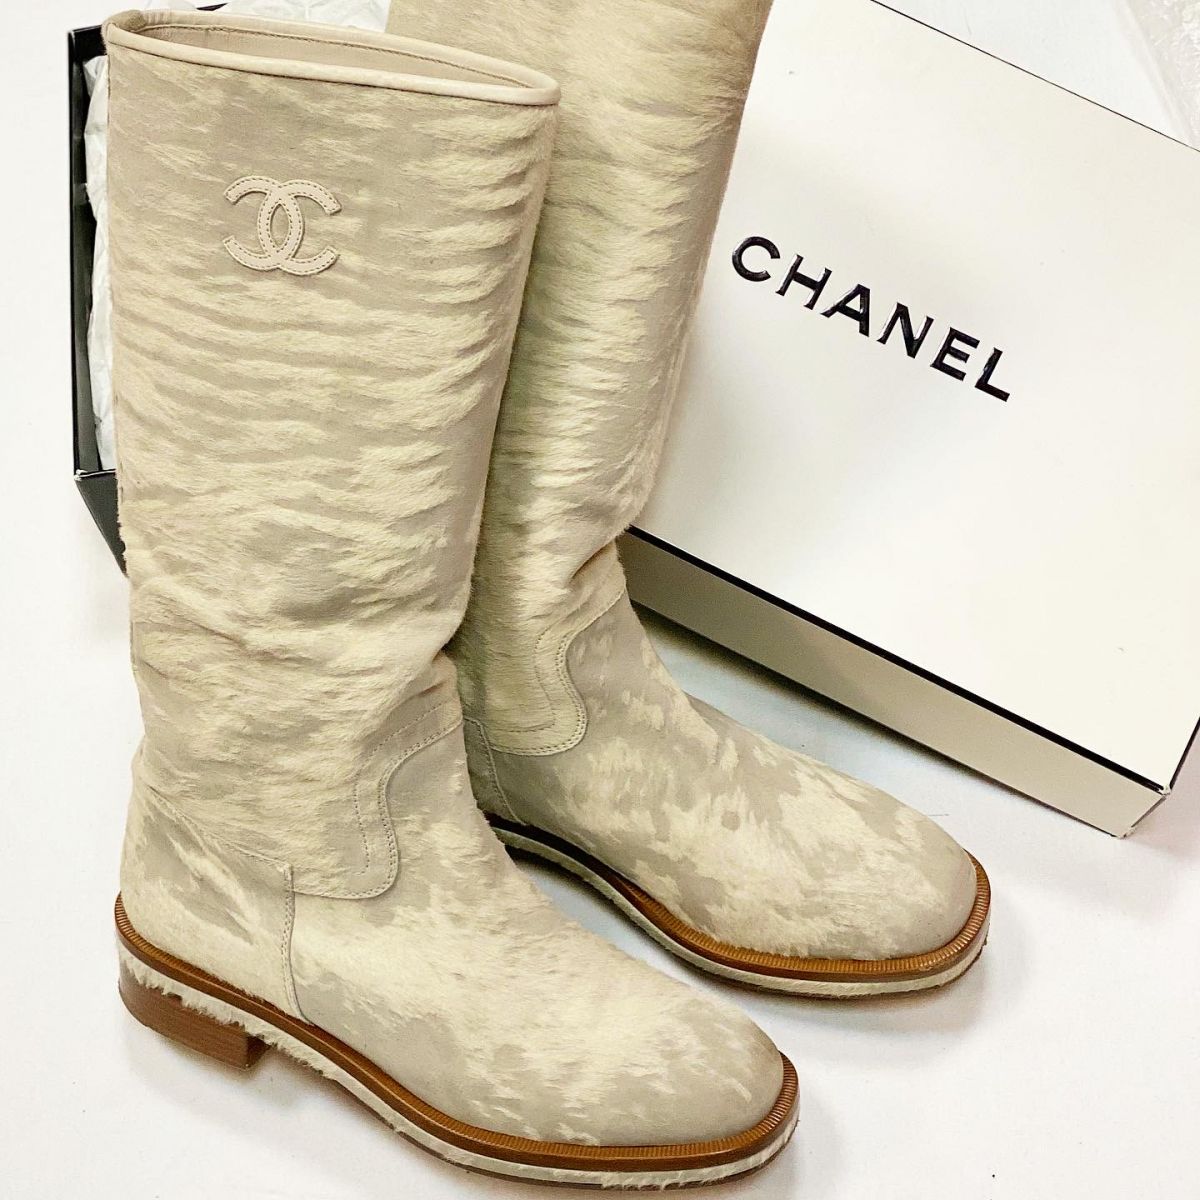 Сапоги Chanel размер 40.5 цена 44 616 руб 